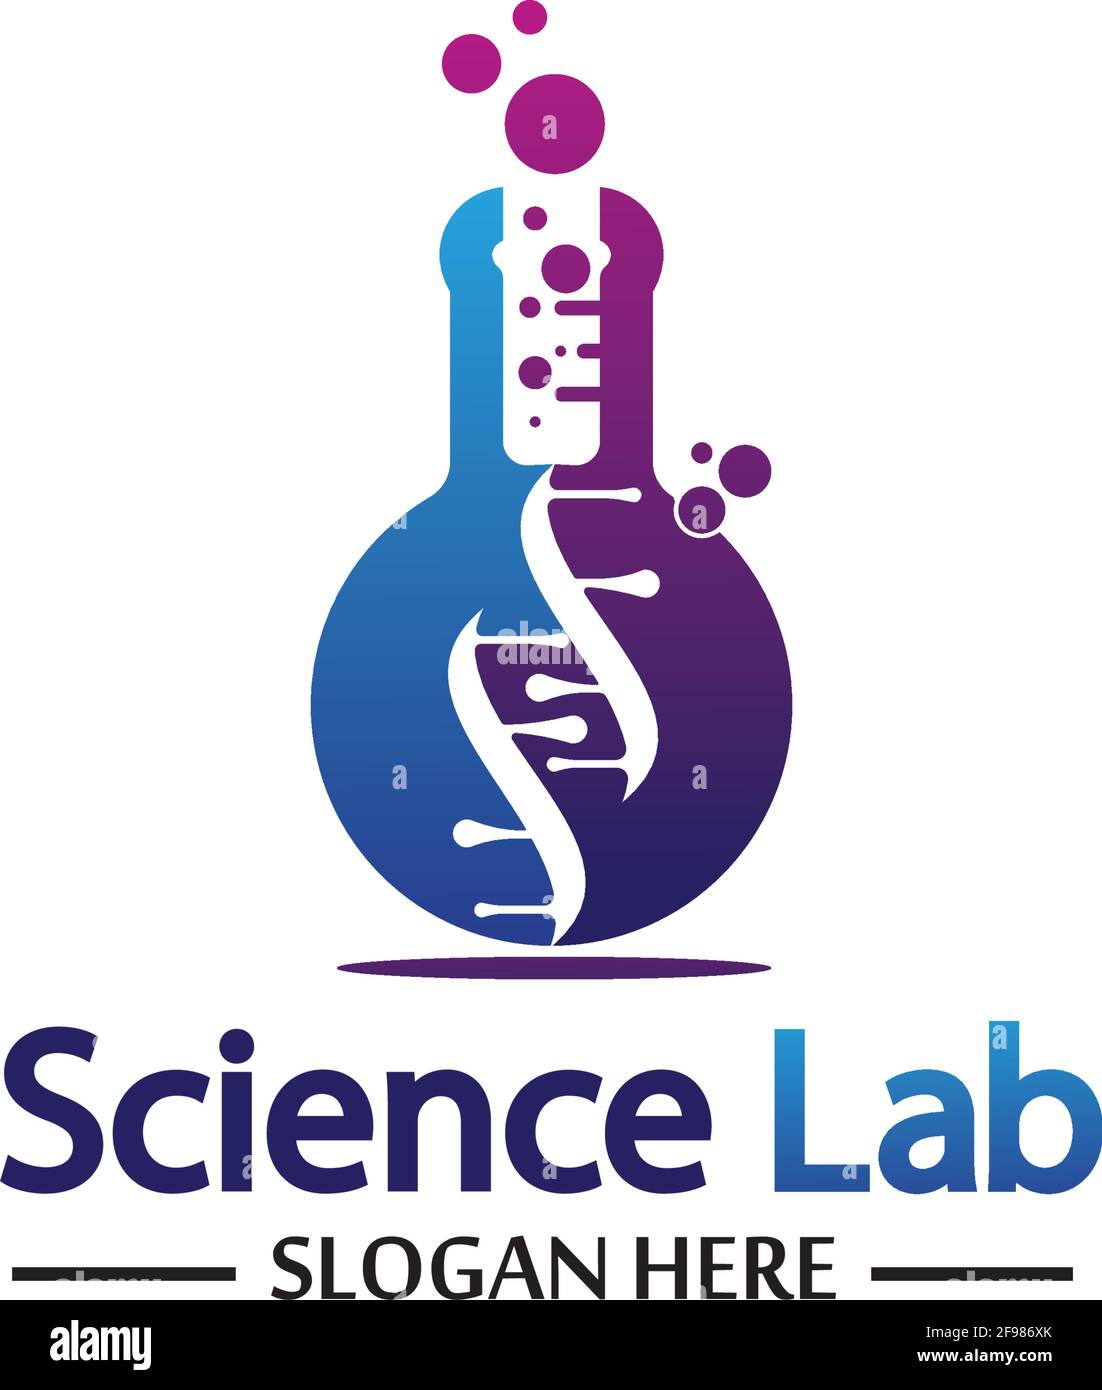 Top more than 131 science lab logo - camera.edu.vn